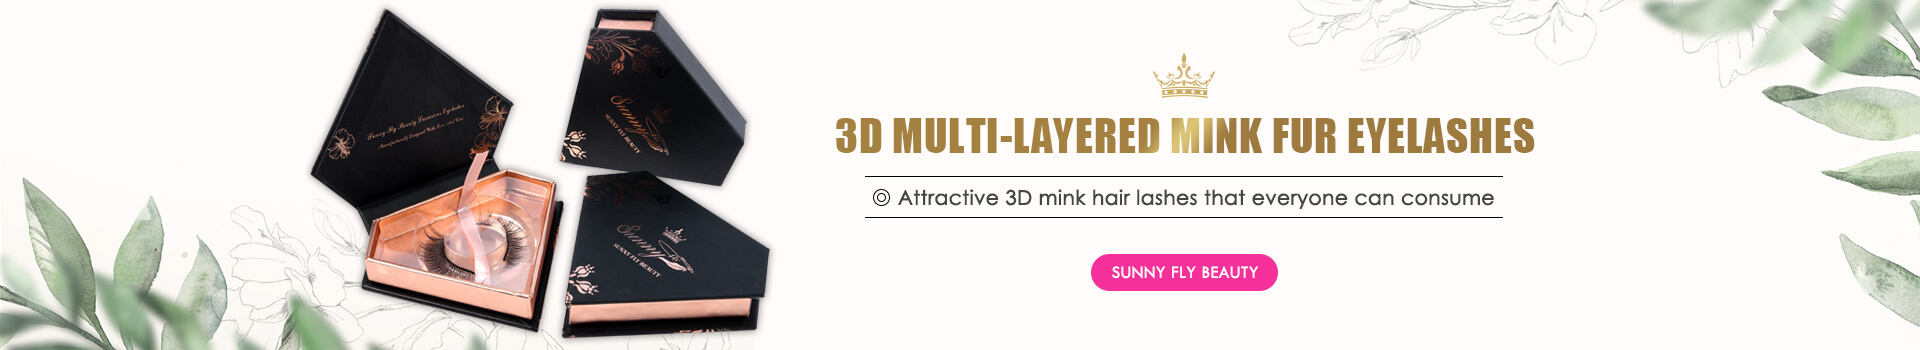 3D Multi-layered Mink Fur Eyelashes MG06